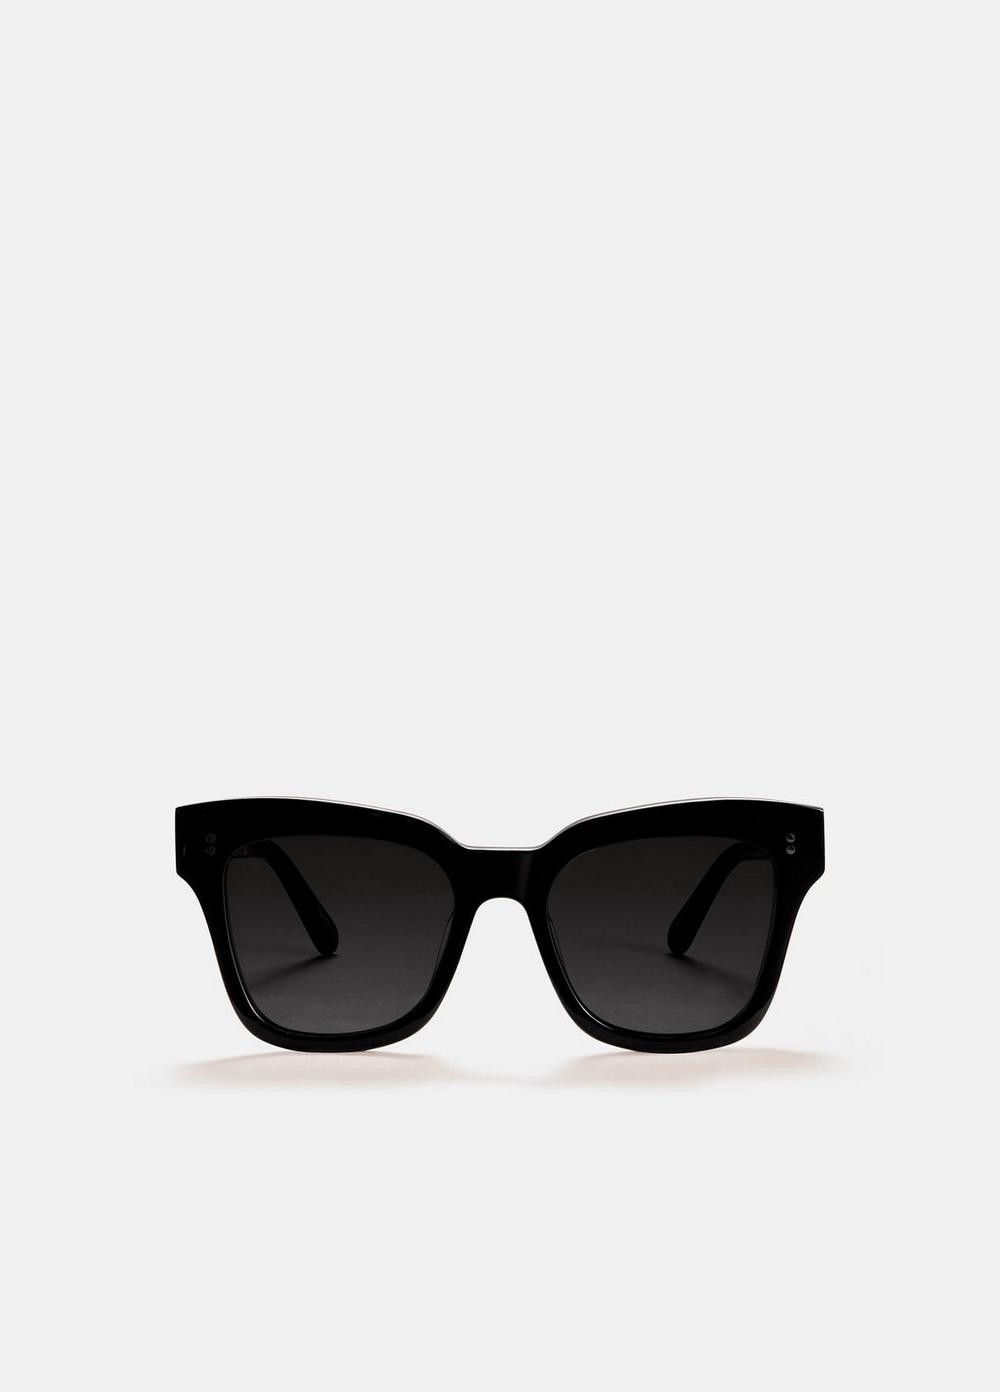 Chimi 07 Sunglasses, Black Vince